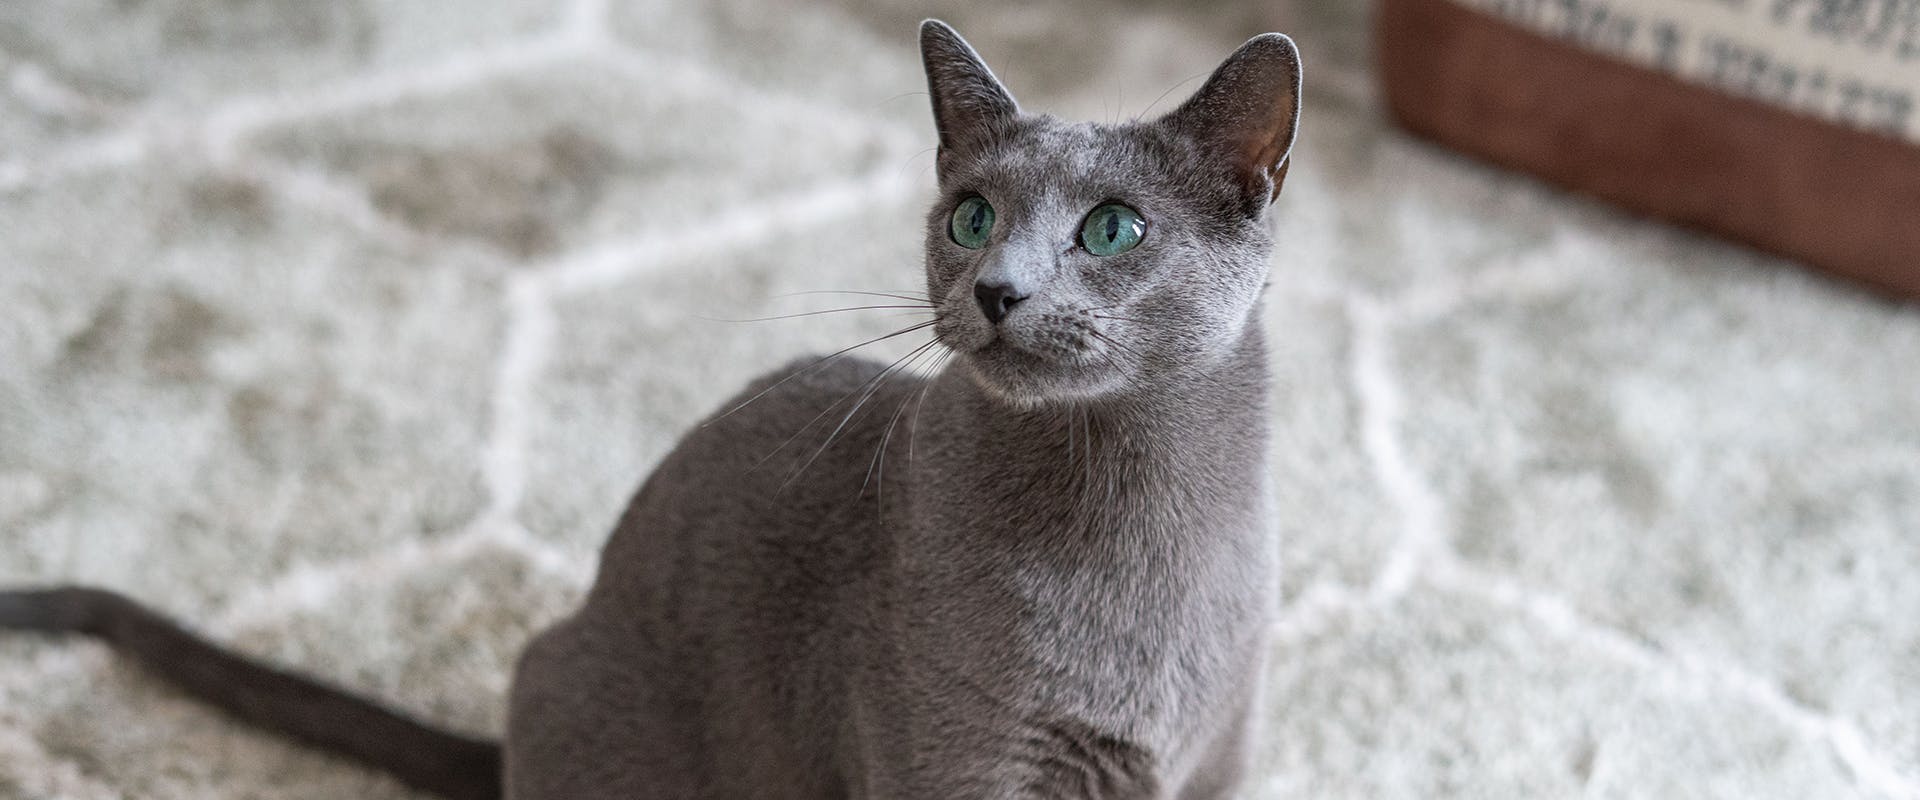 A Russian Blue cat looking alert